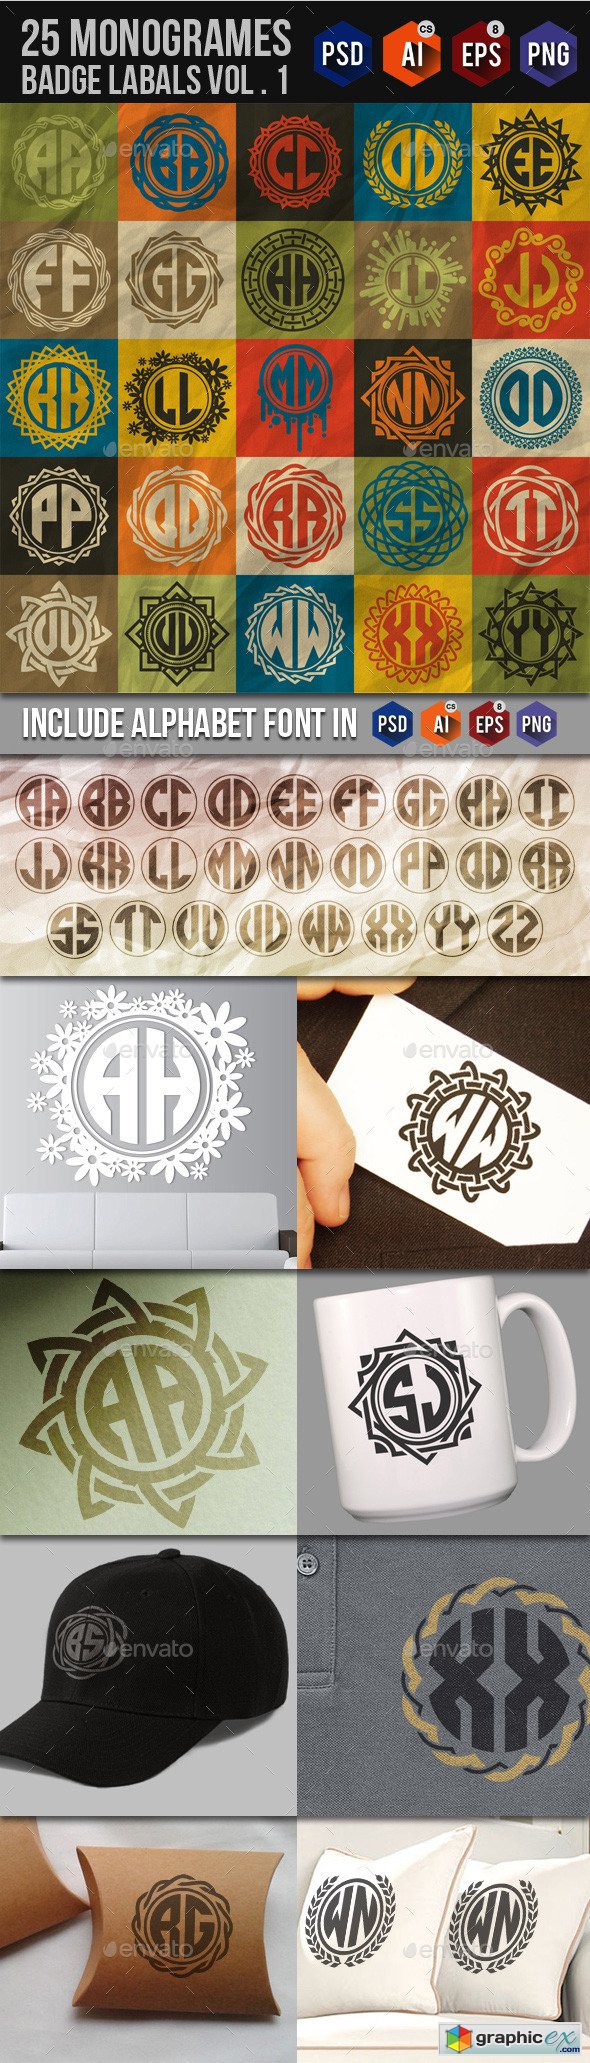 25 Monogrames Badge Labals With Alphabet v1